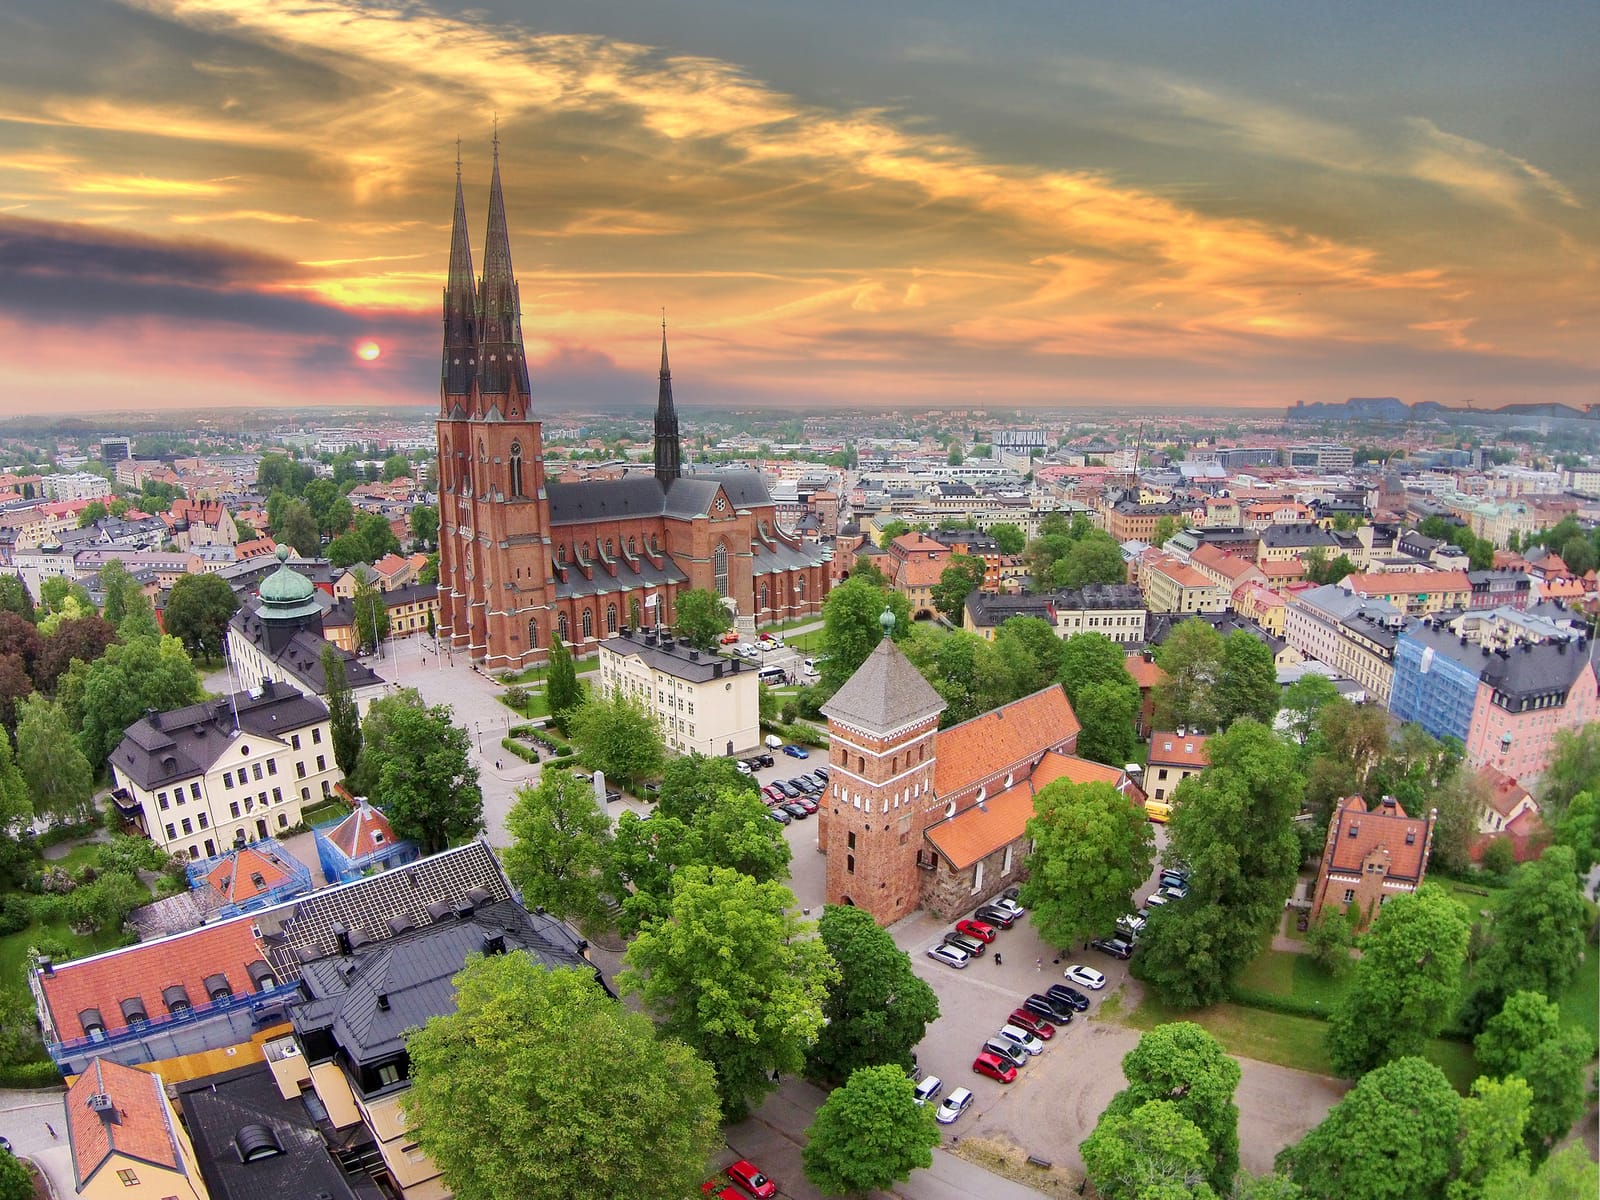 Descopera Uppsala, Suedia I Itinerar de 2 zile